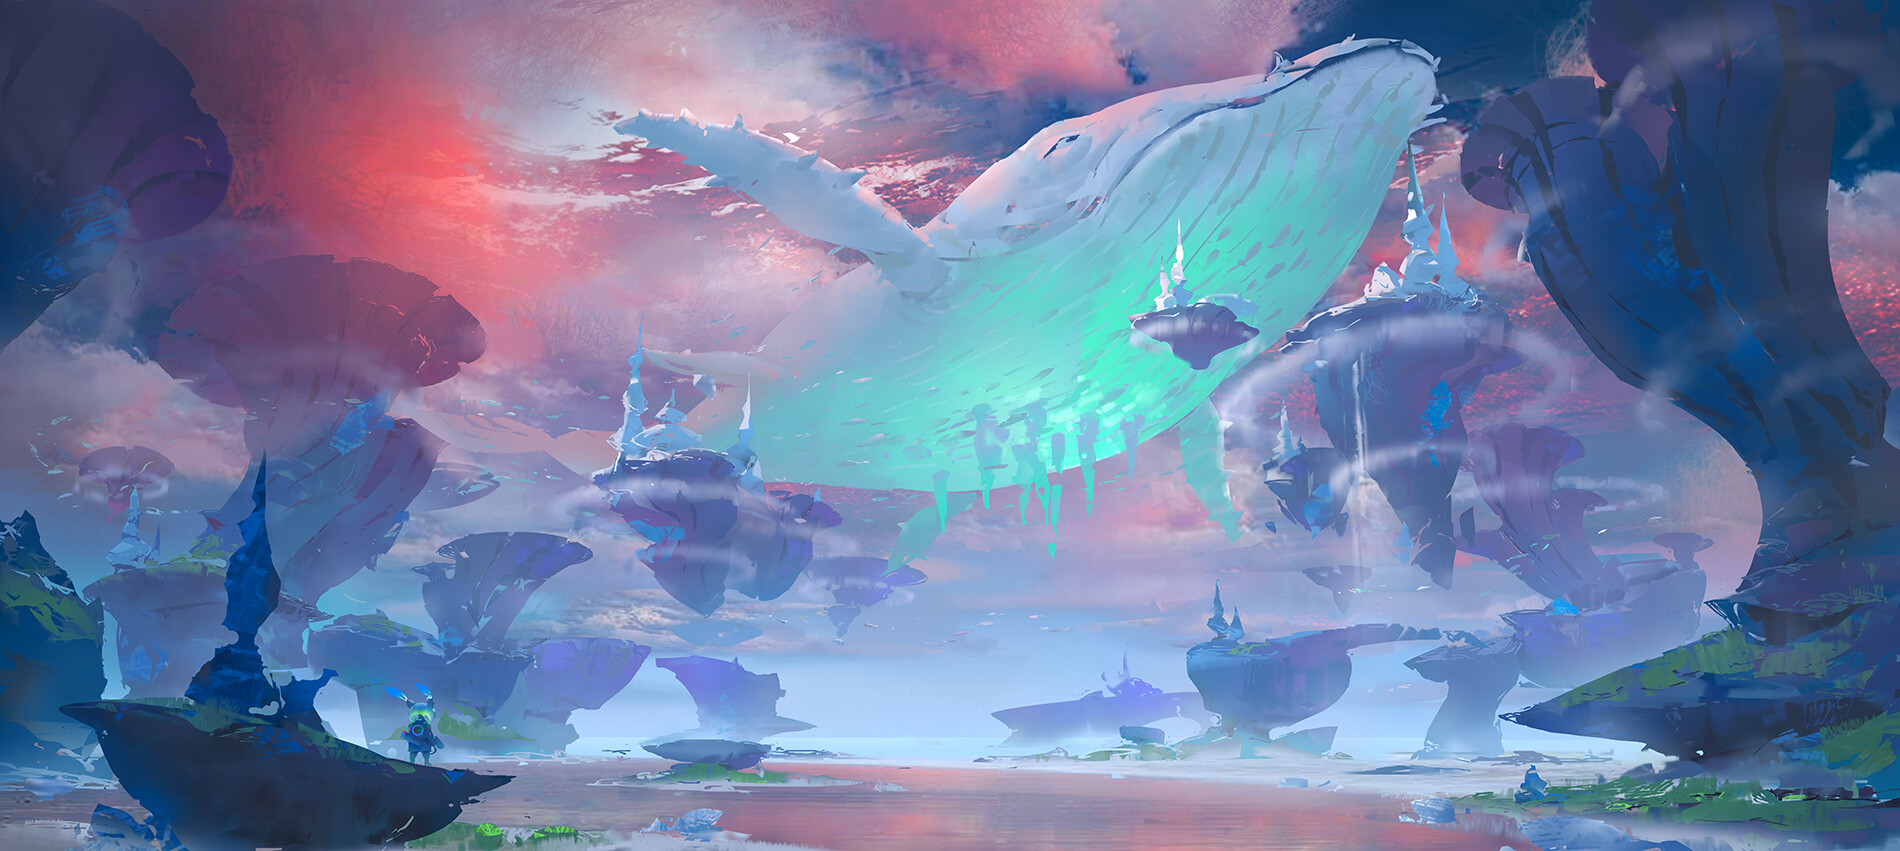 Digital Art Fantasy Art 3 LY Studio Whale Landscape Surreal 1900x851